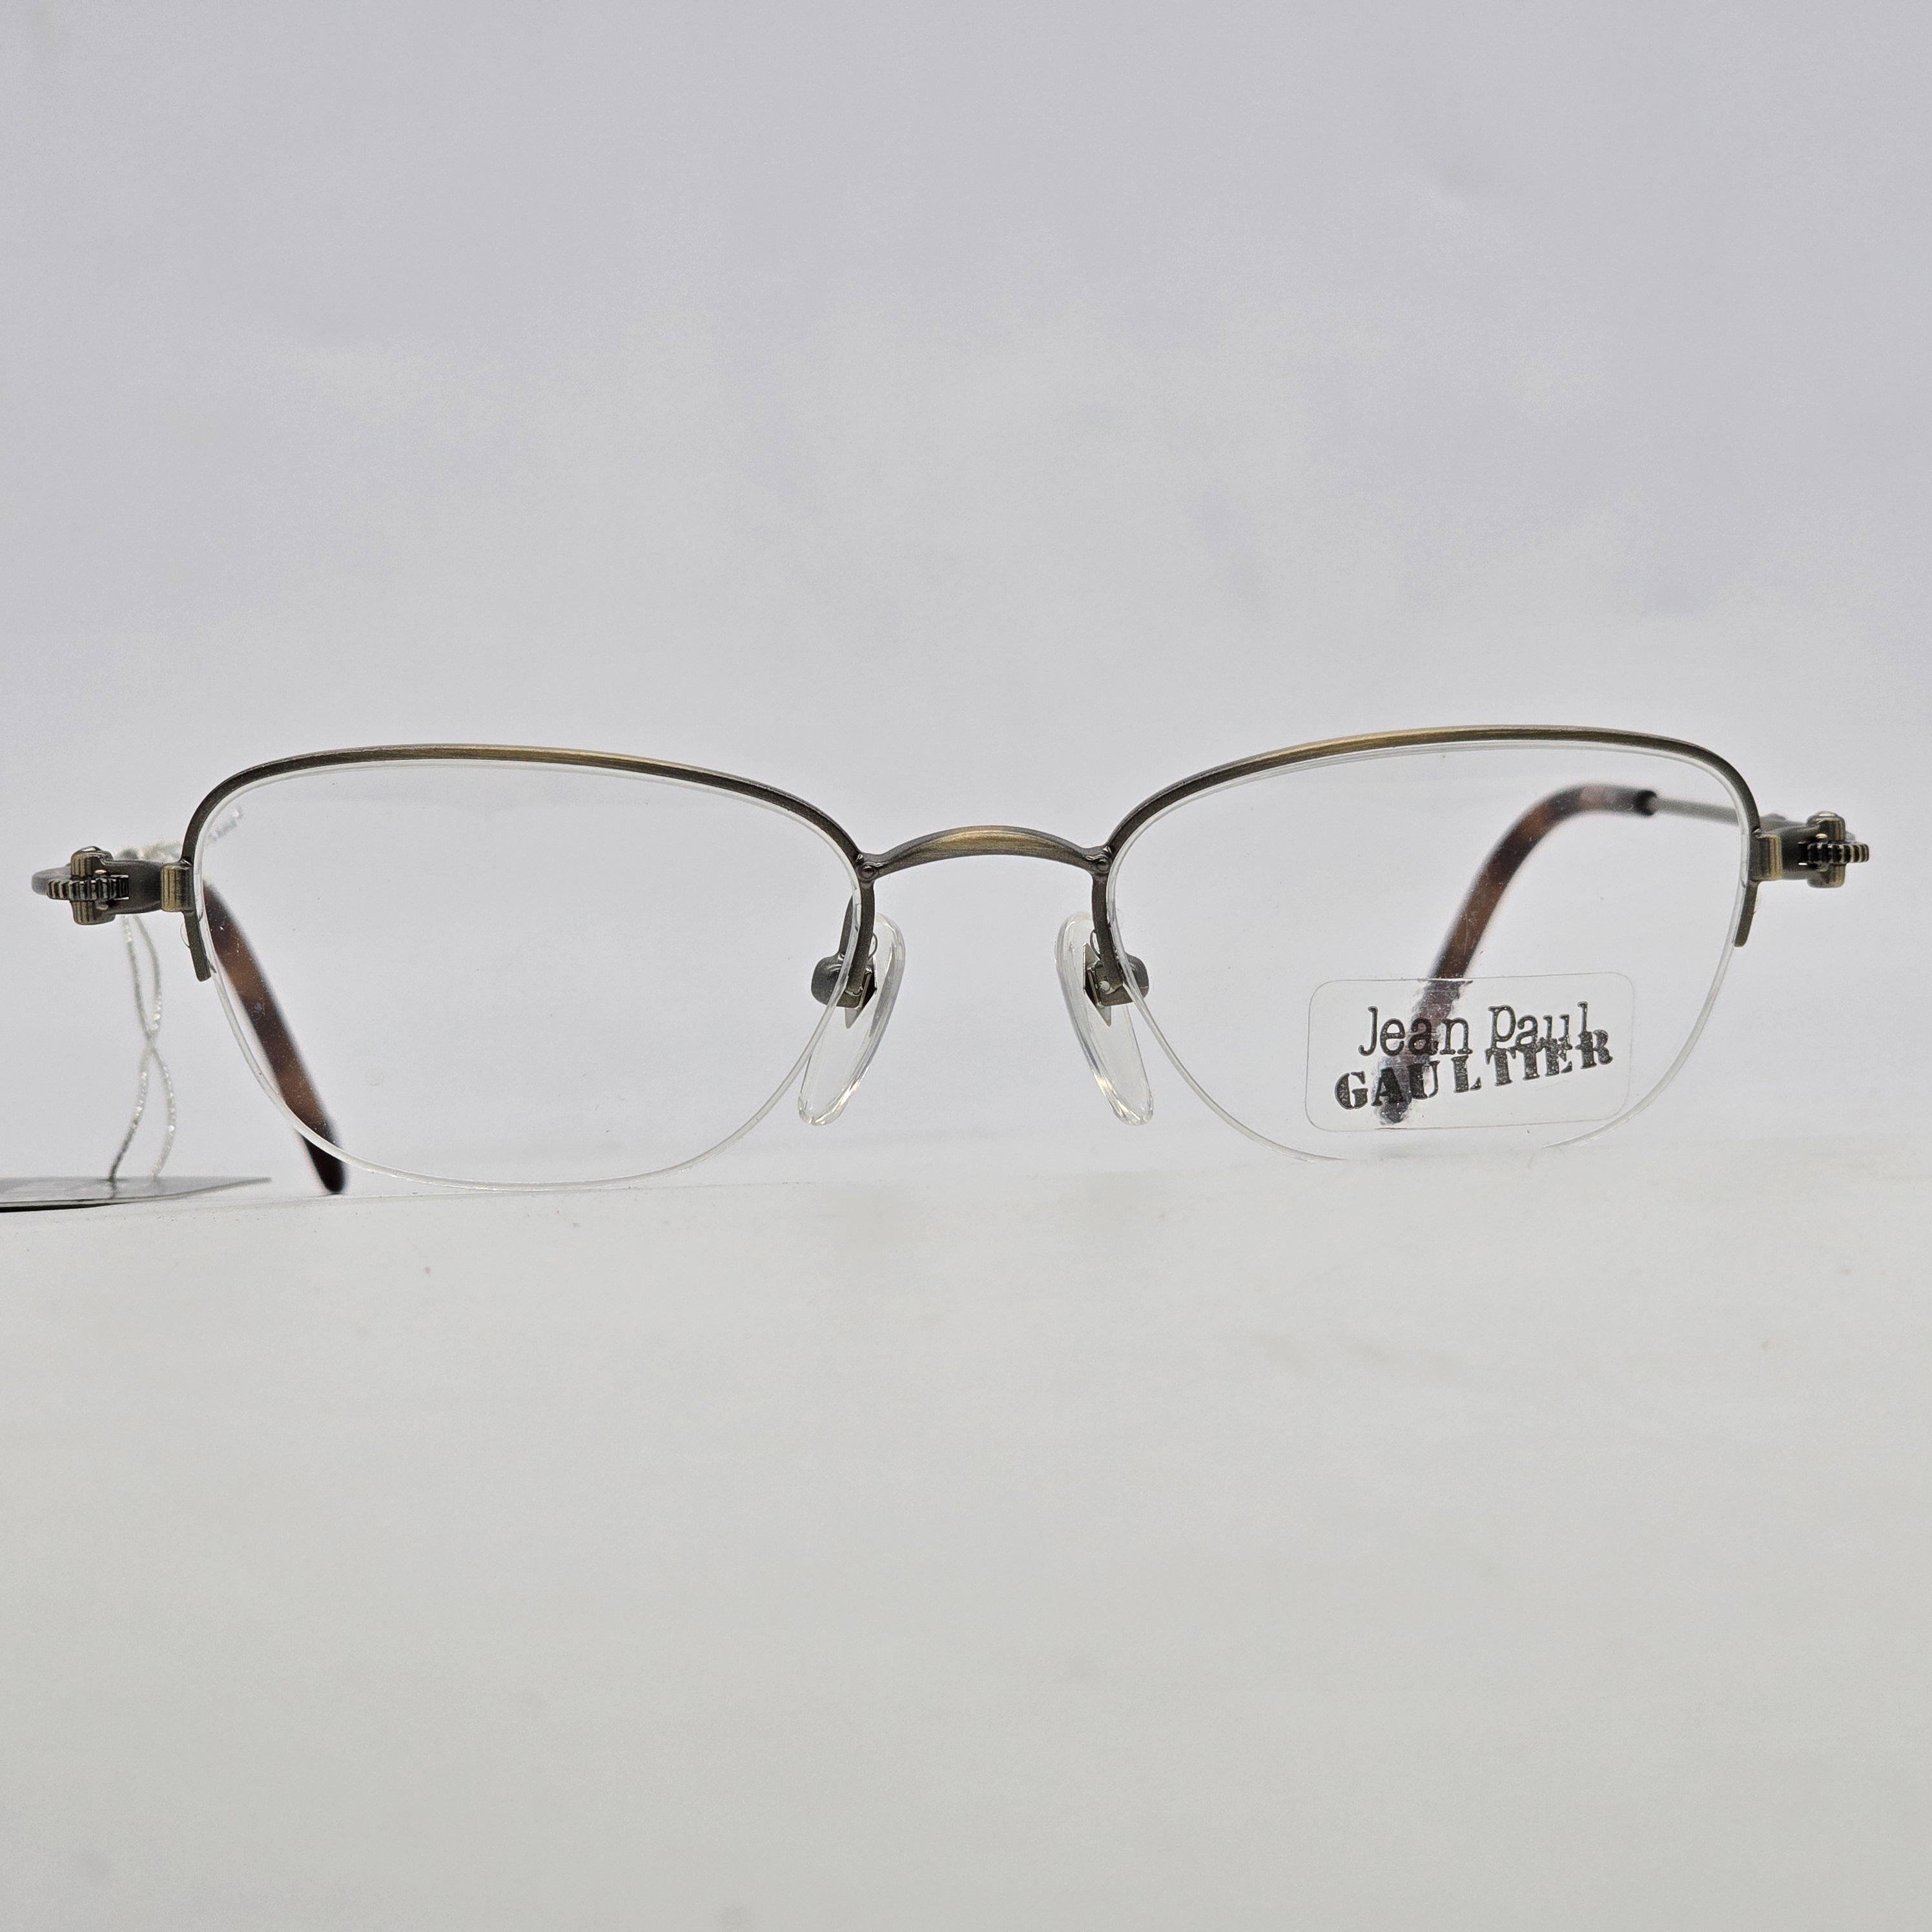 Vintage - Jean Paul Gaultier - 90s Half-Rim Clockwork Glasses - 2